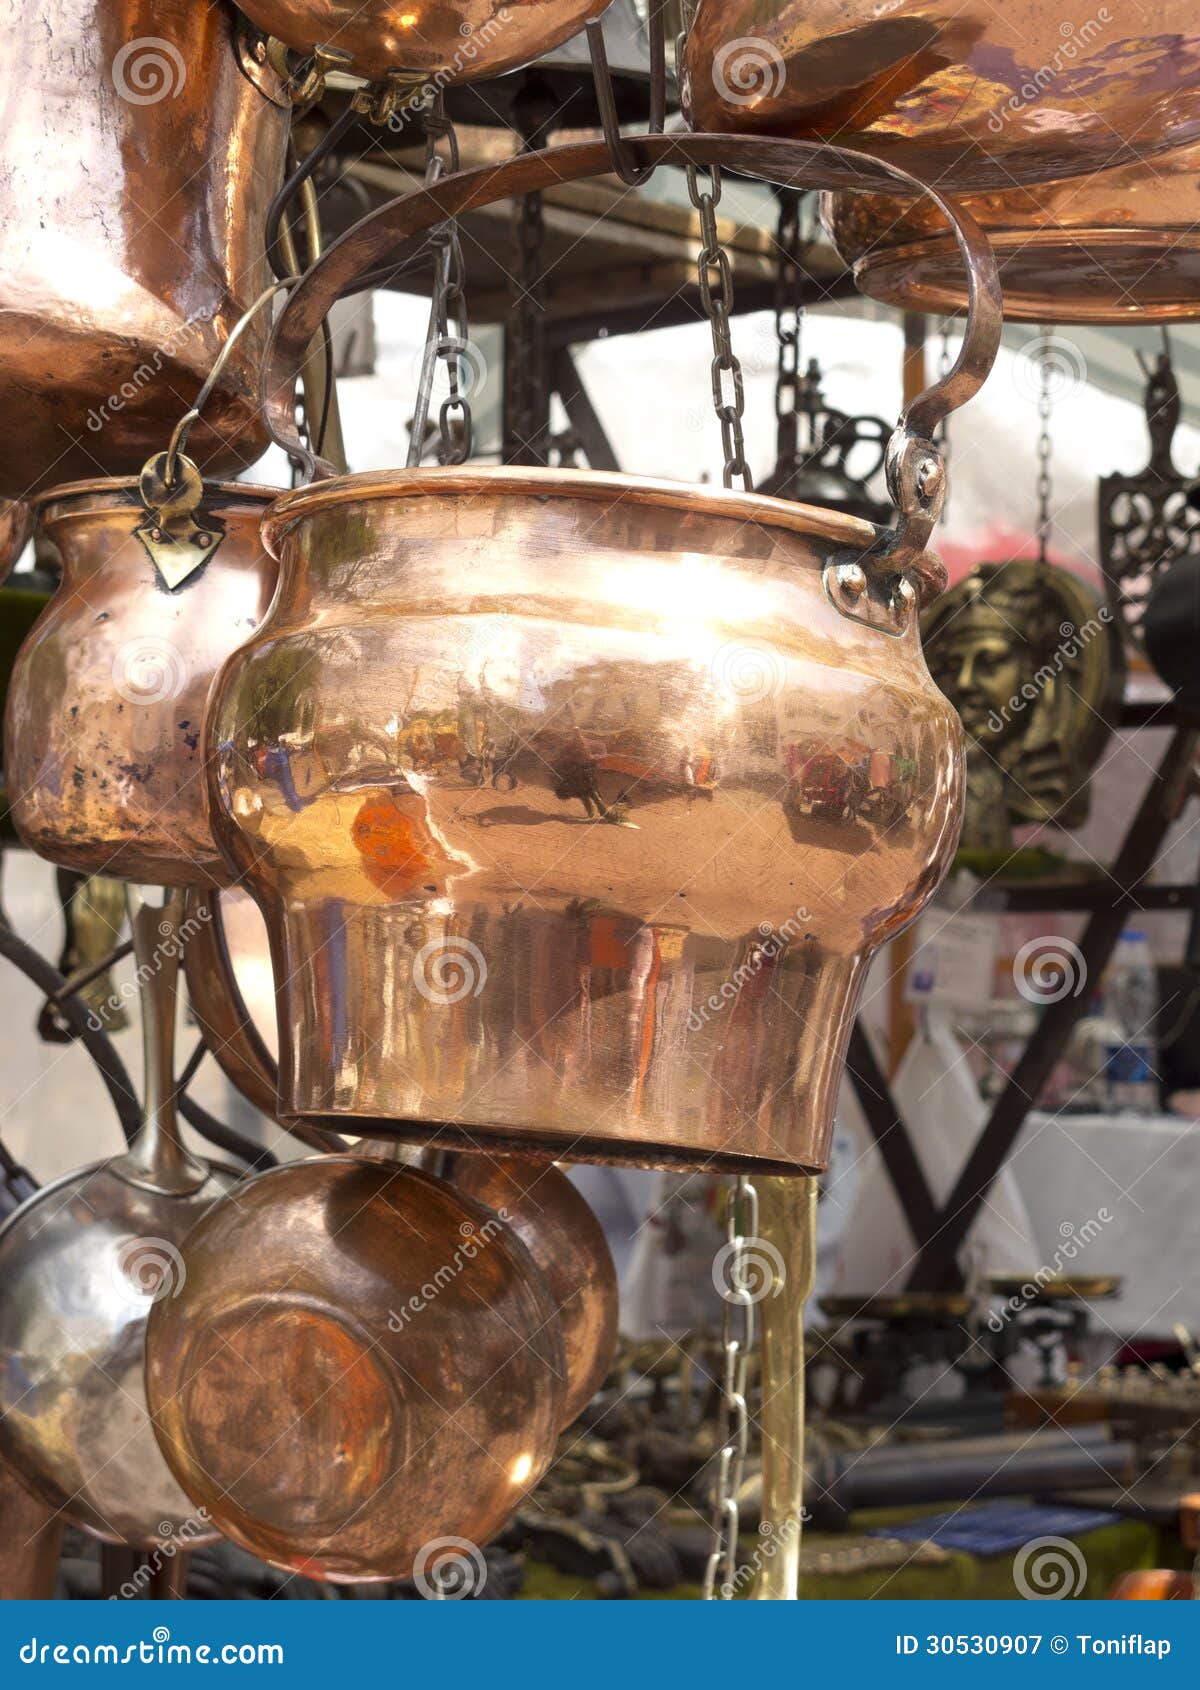 Selling Antique Copper Kitchen Utensils Stock Image ...